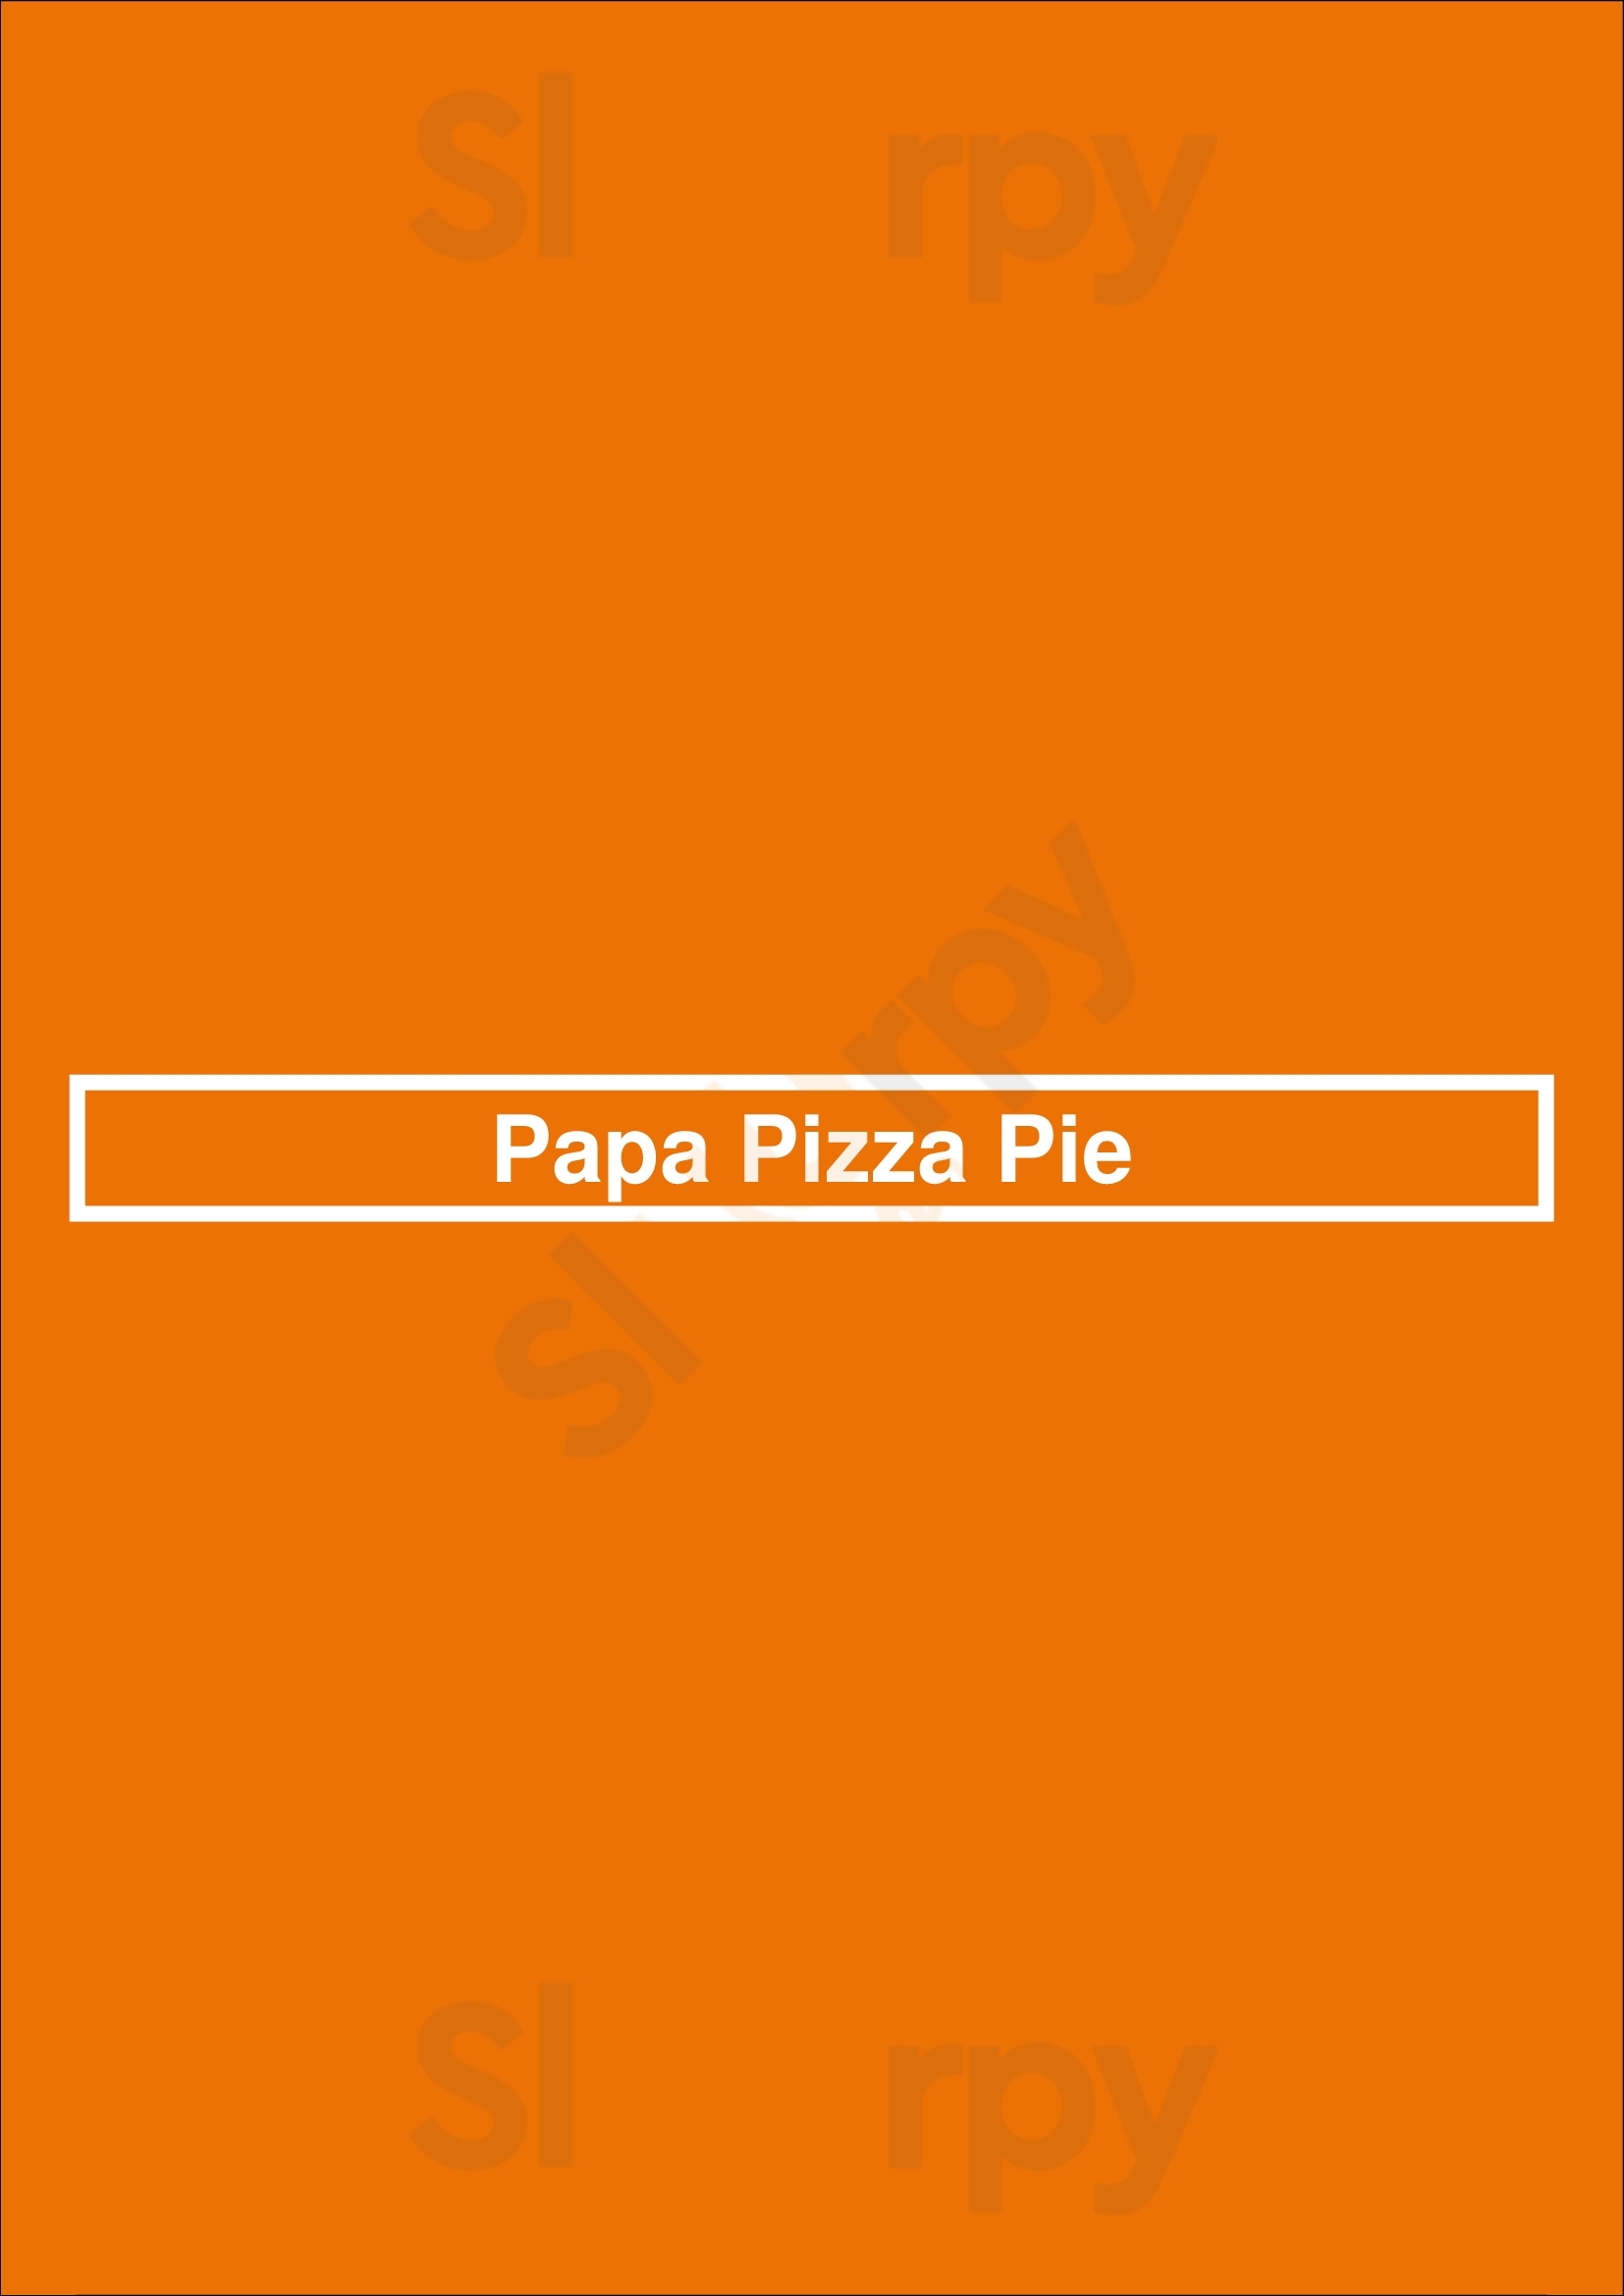 Papa Pizza Pie Fullerton Menu - 1